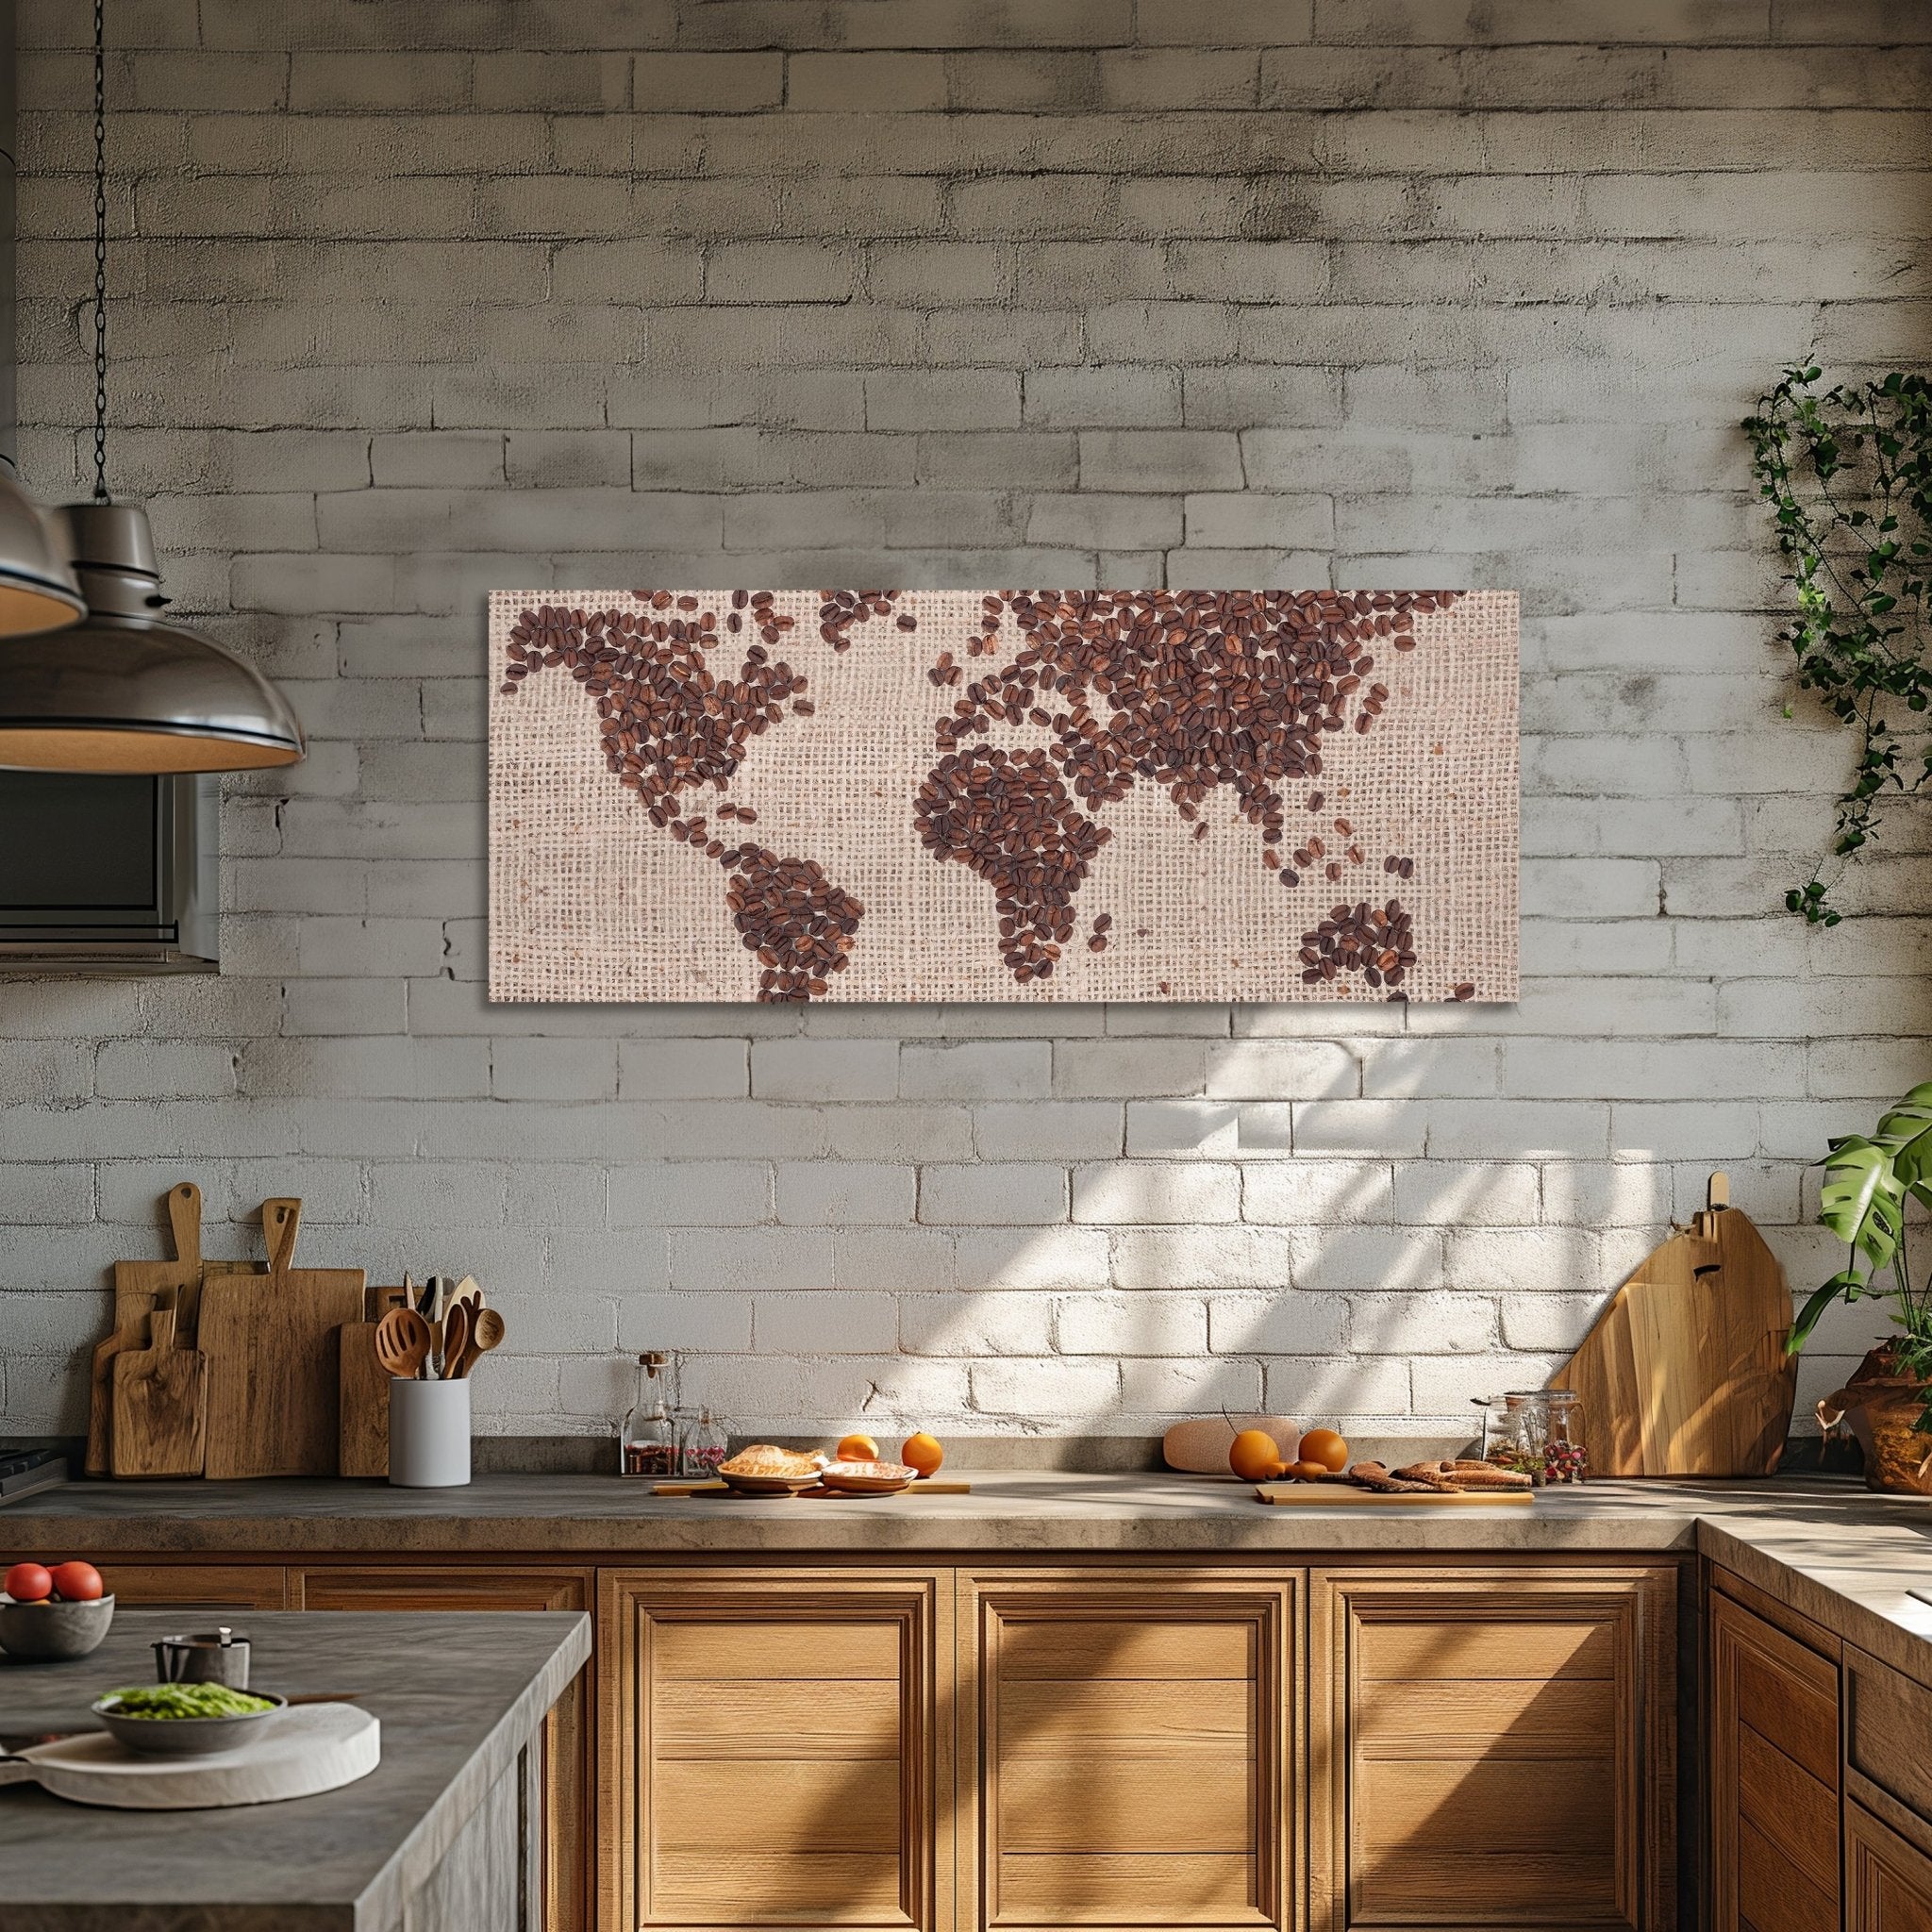 Leinwandbild Weltkarte Kaffee M0012 kaufen - Bild 2